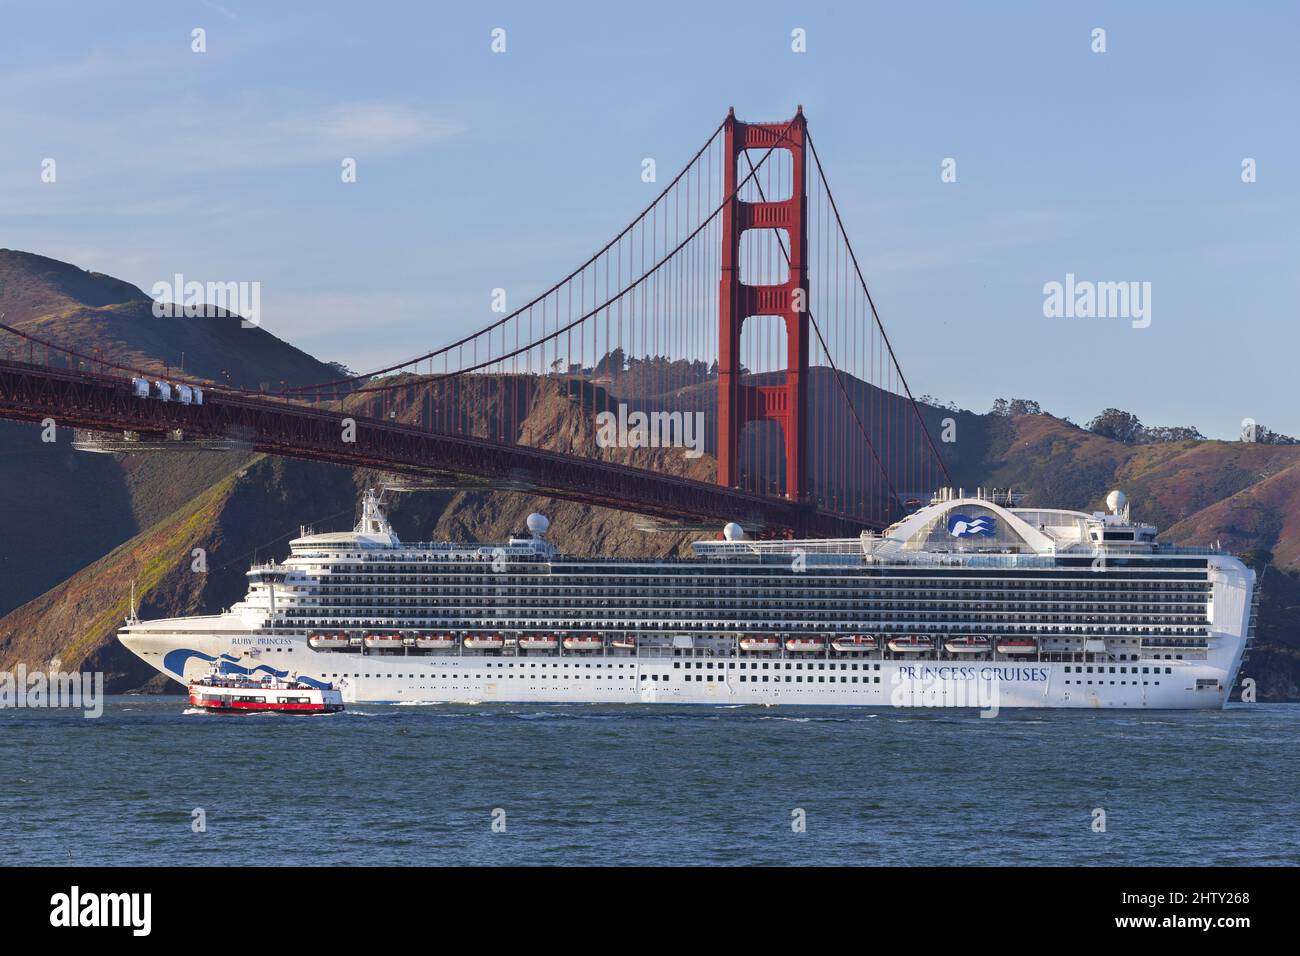 Princess Cruises Großes Kreuzfahrtschiff, Das Unter Der Berühmten Golden Gate Landmark Bridge Segeln Kann. Malerische San Francisco California Bay Coast Landscape Stockfoto